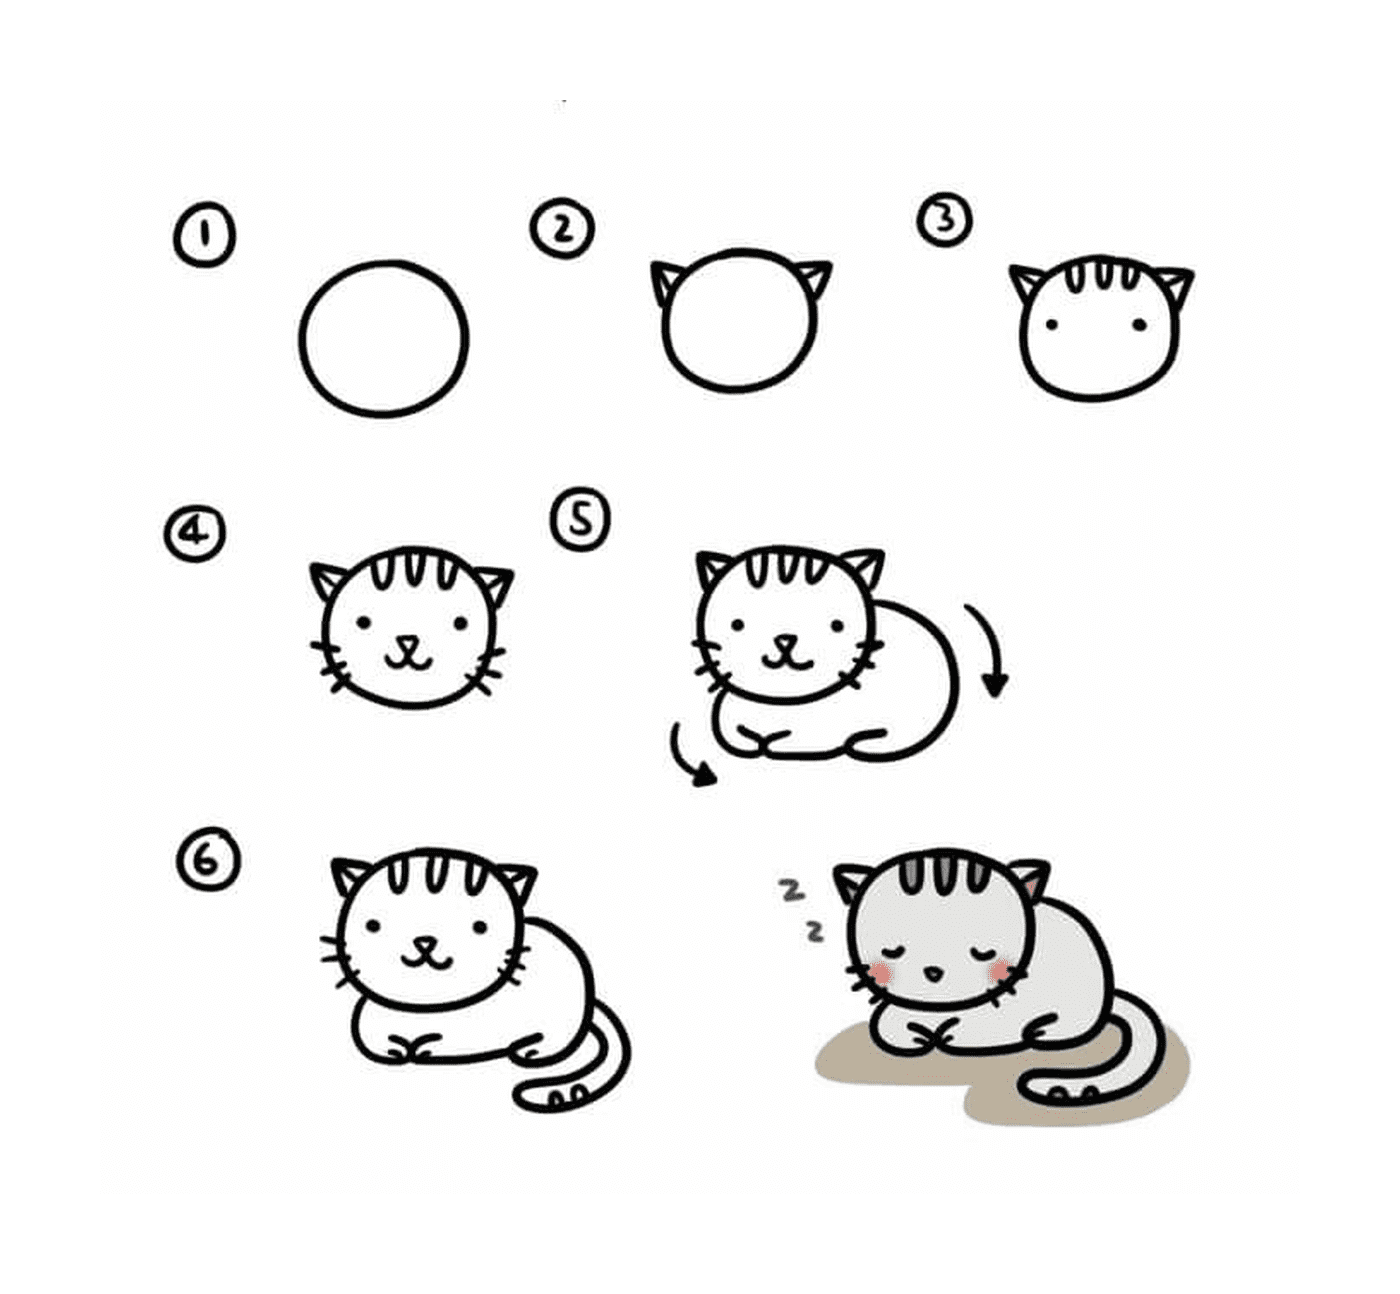  Cómo dibujar un gato paso a paso 